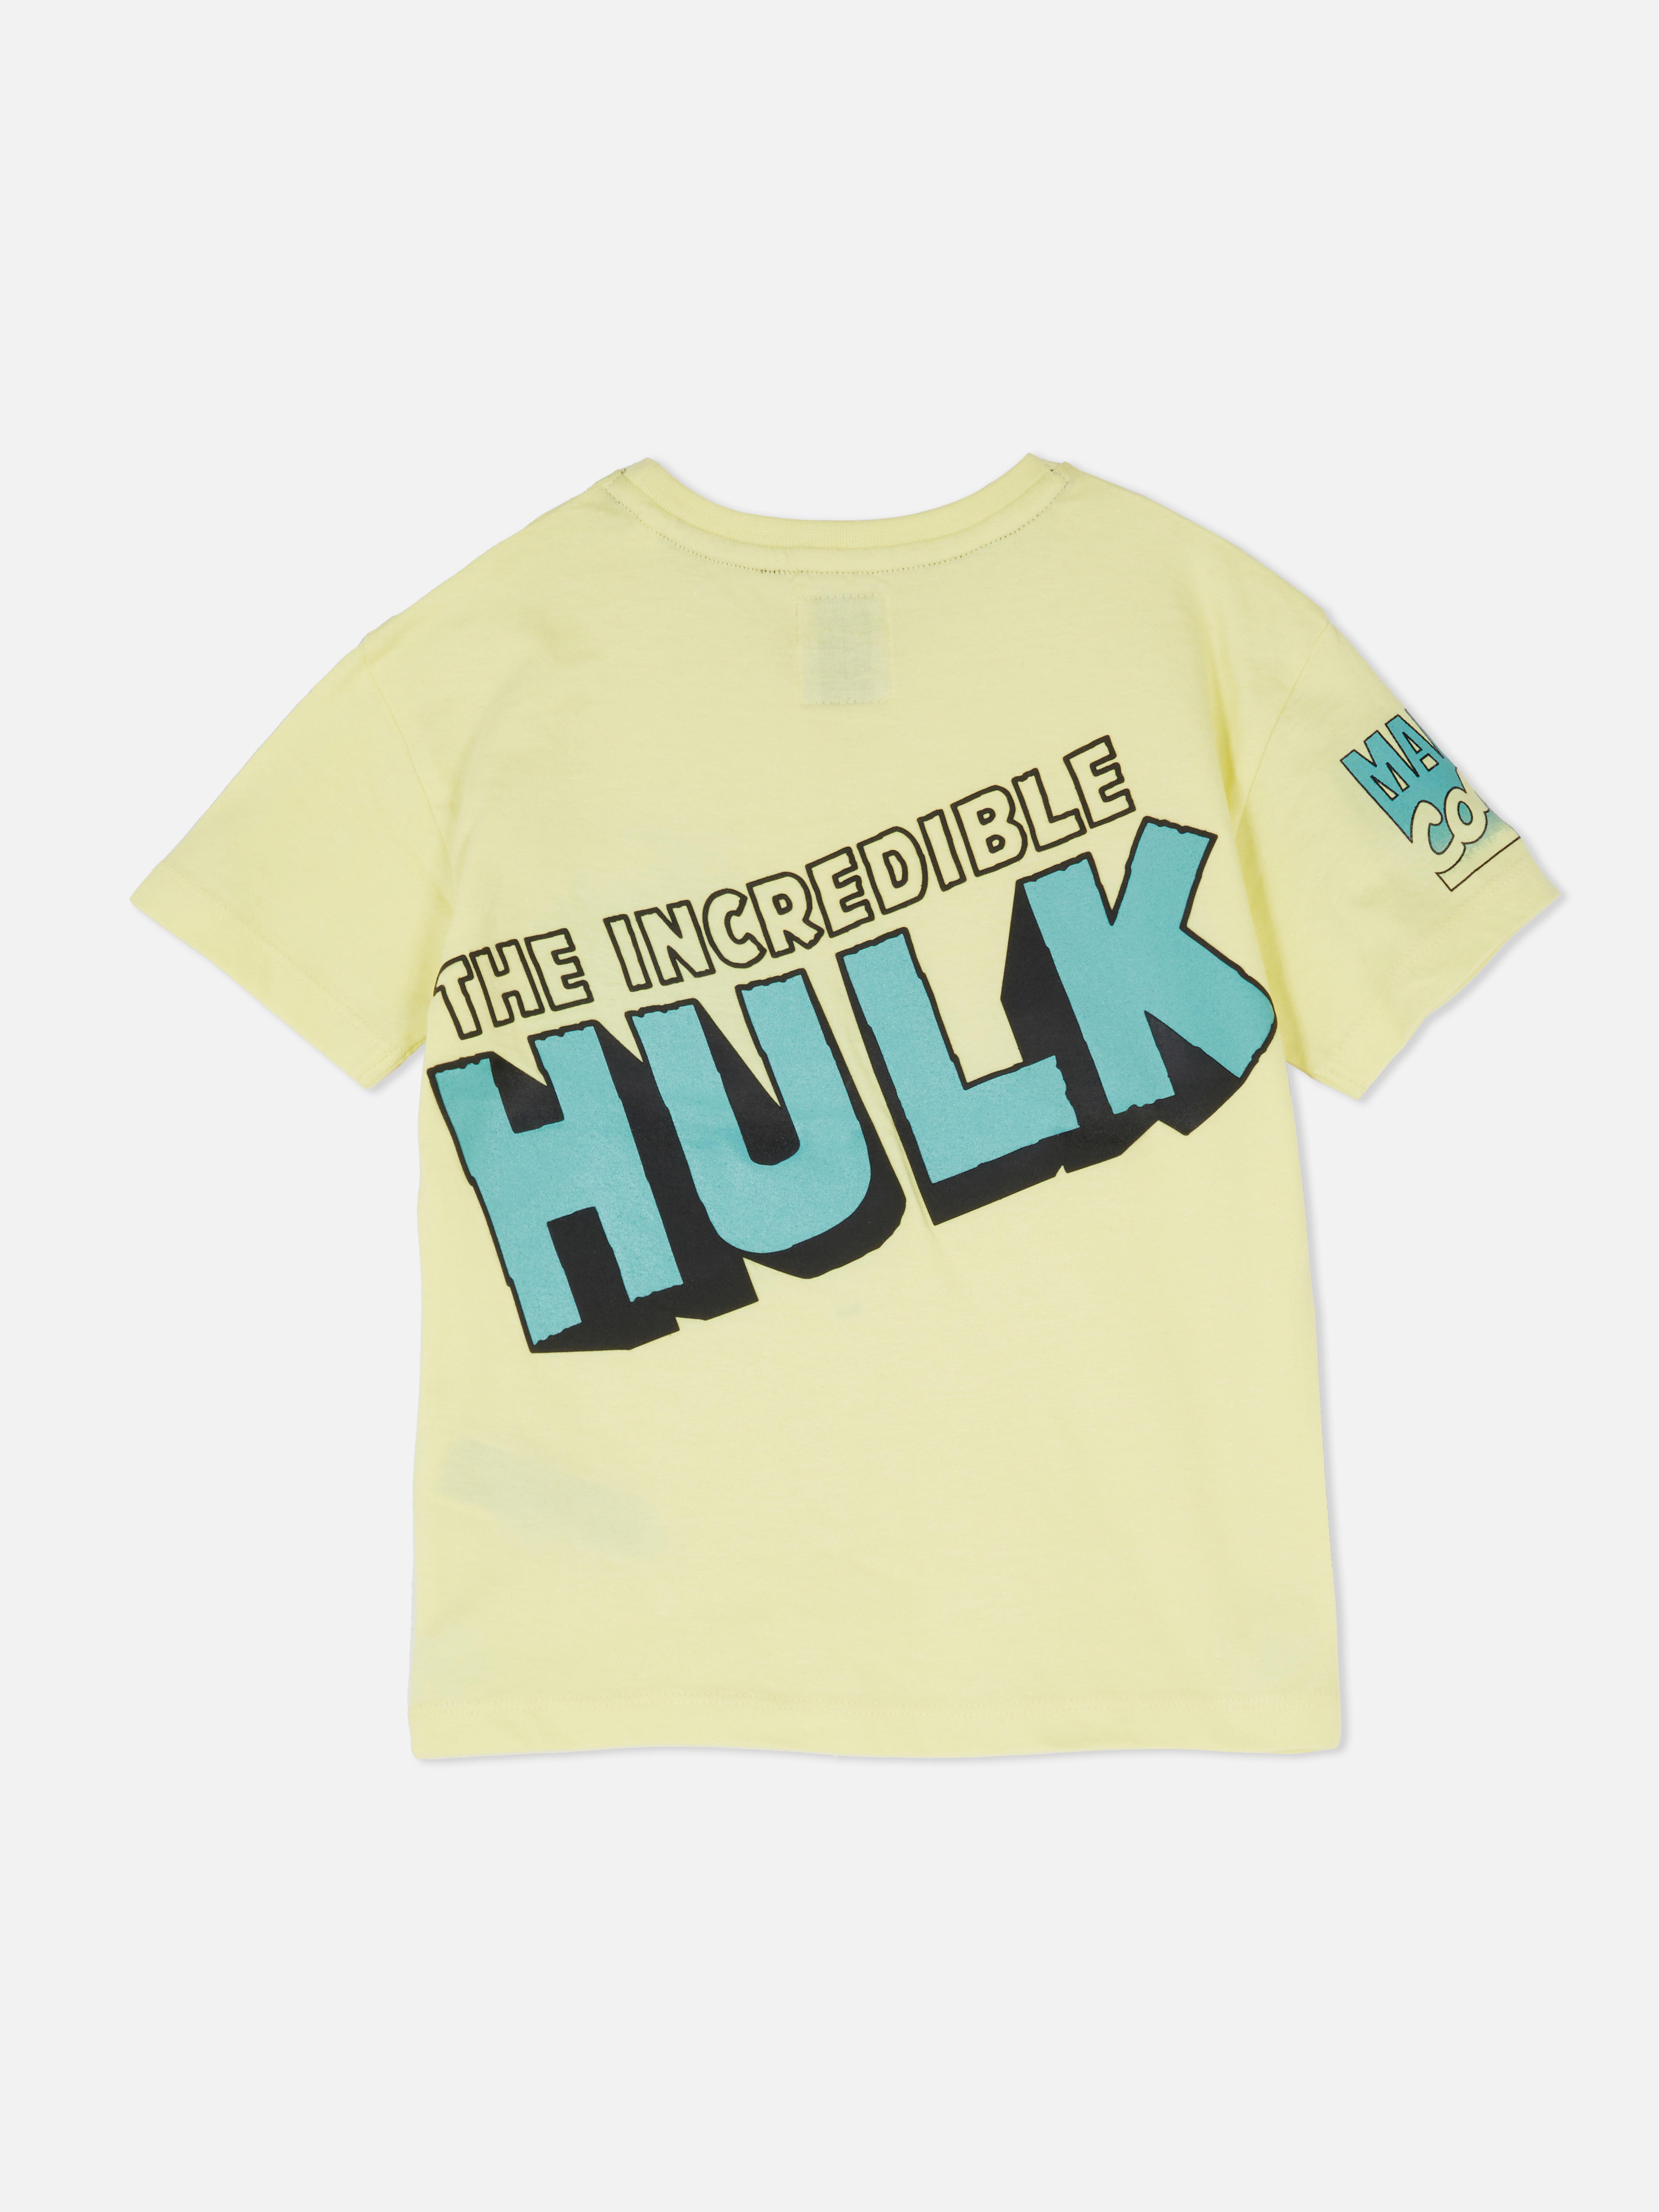 Marvel The Incredible Hulk T-shirt